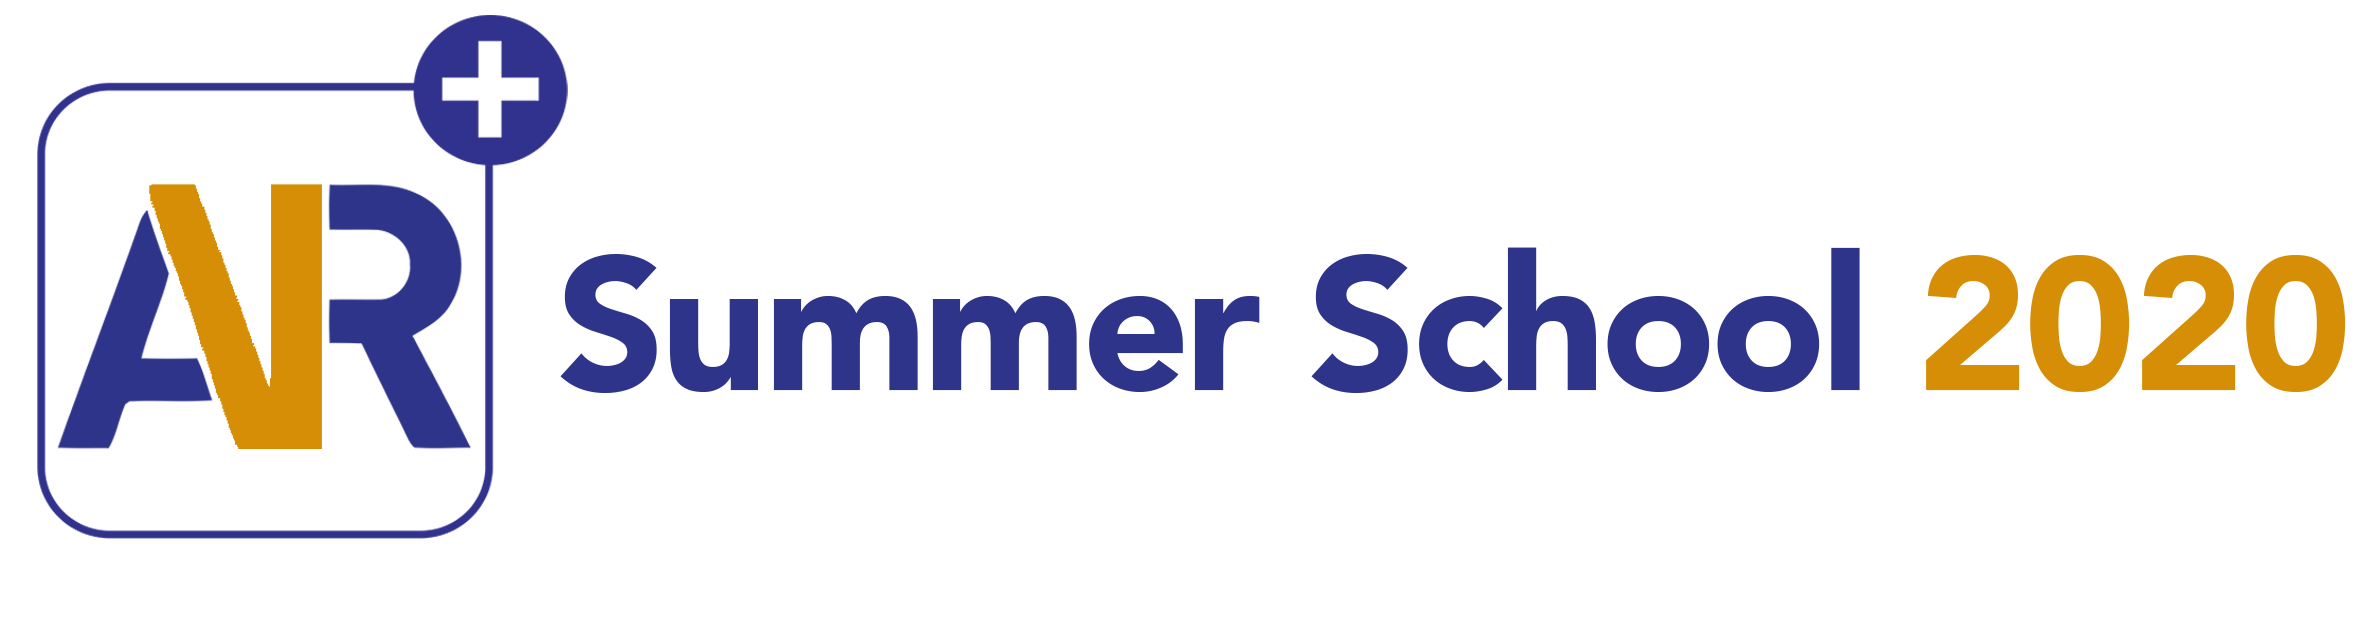 SUMMER_SCHOOL_2020